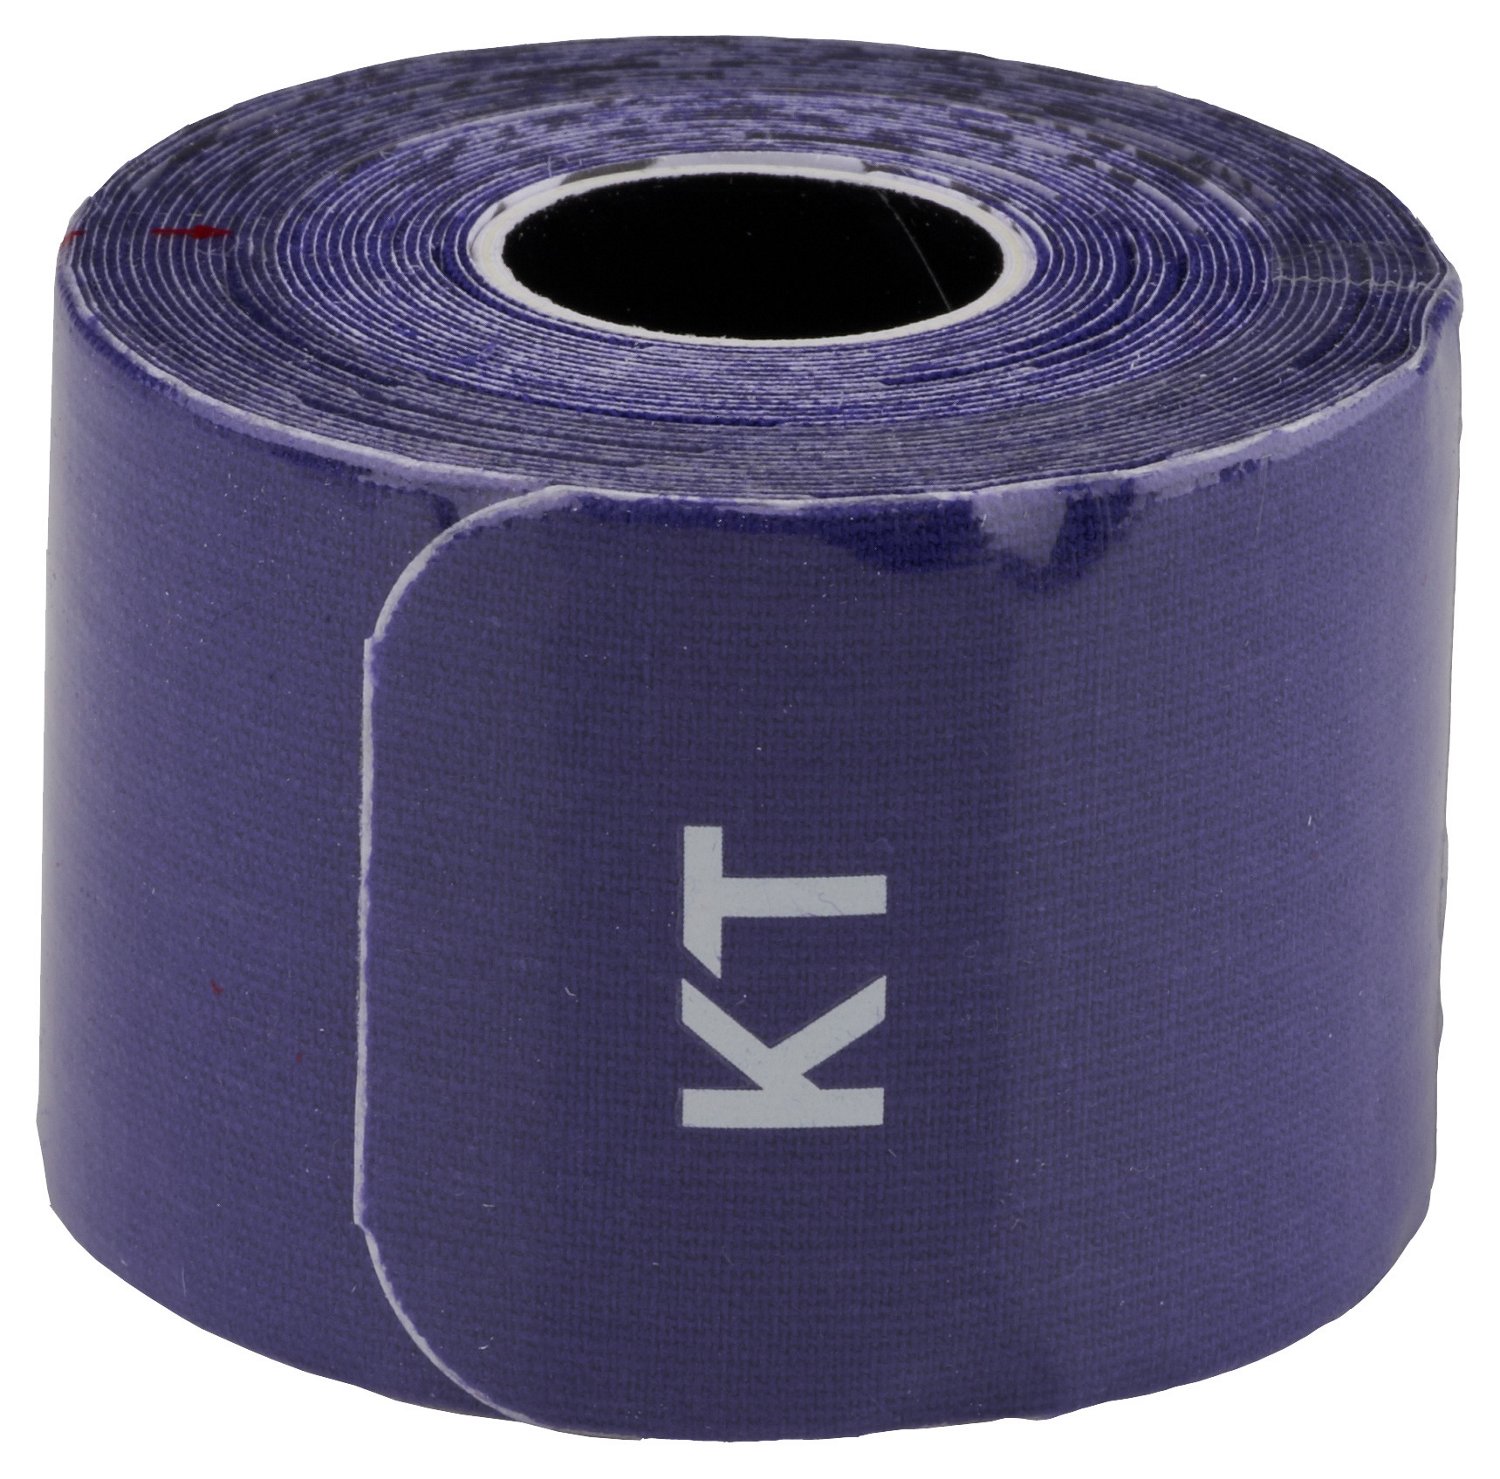 KT Tape Original Precut Strips 20-Pack